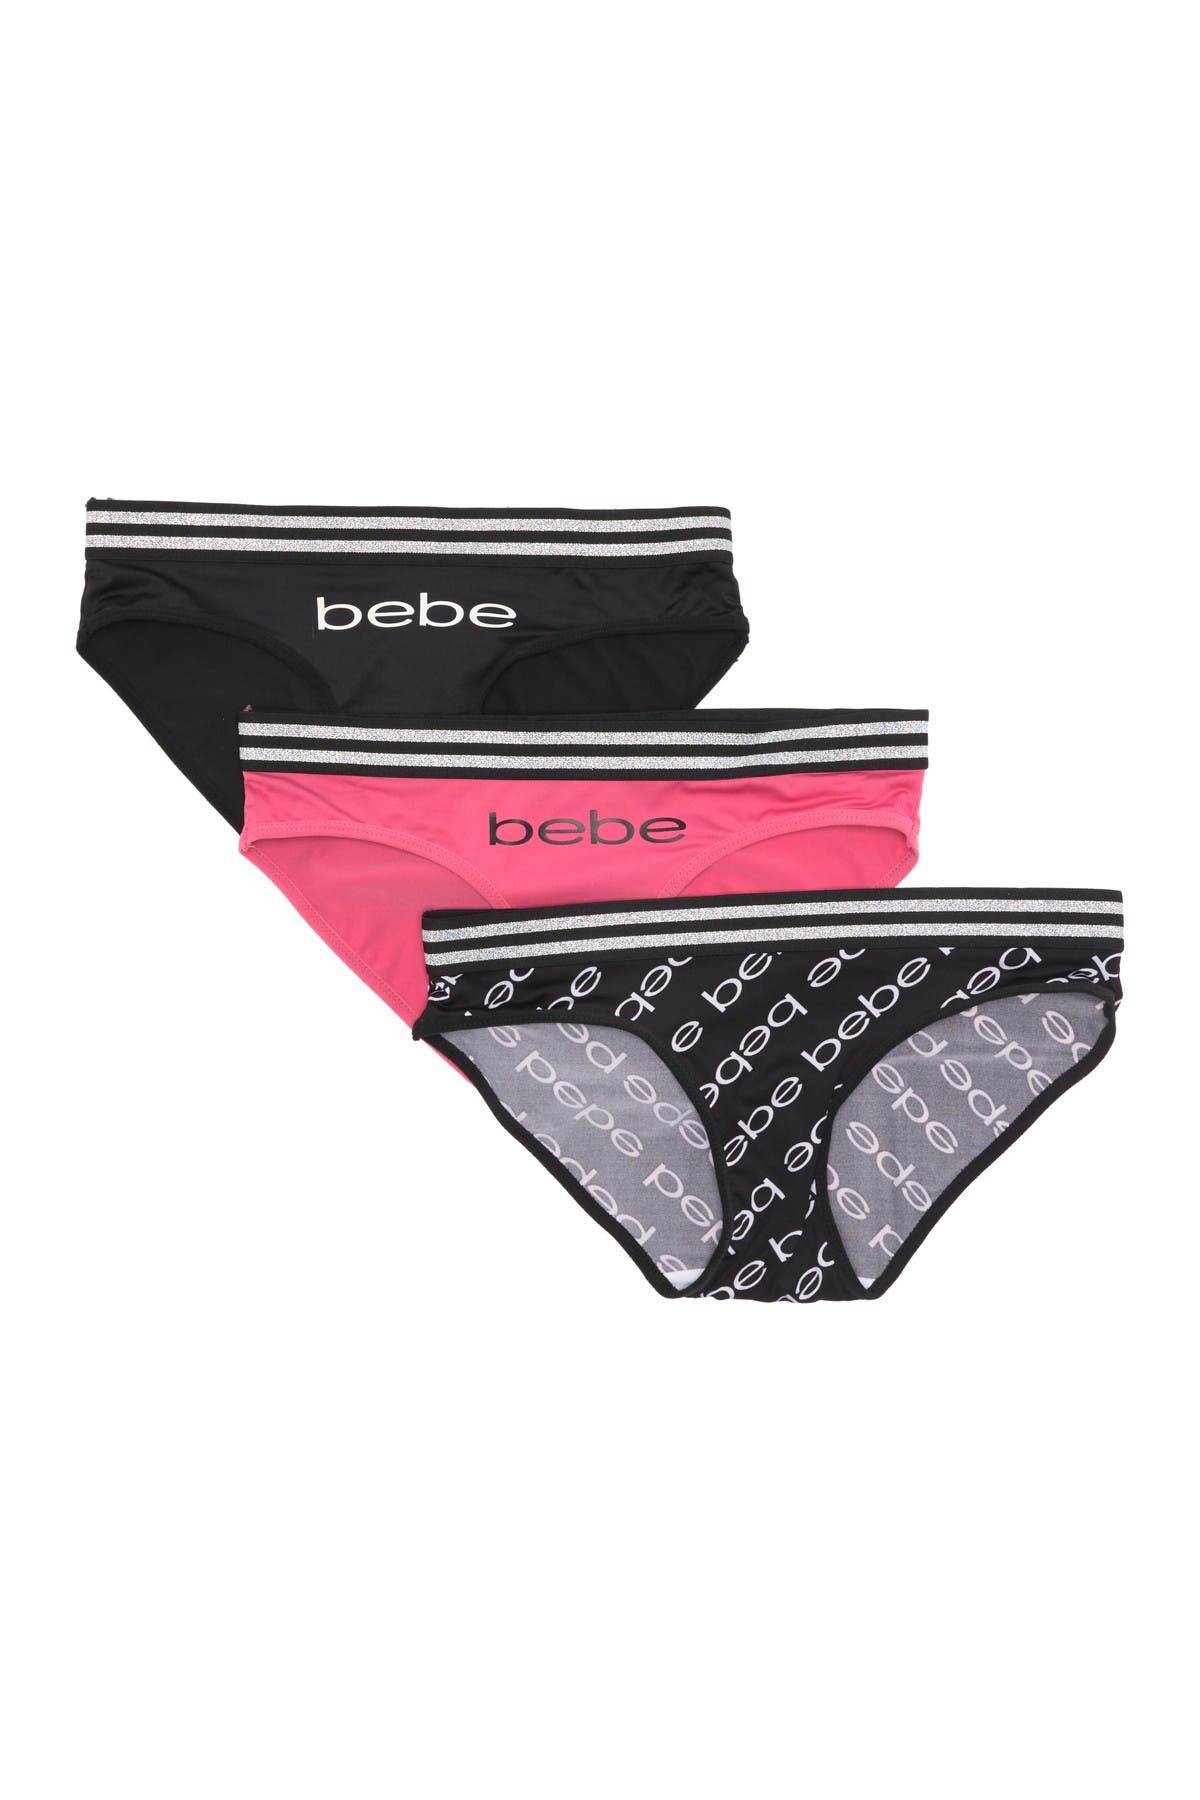 Bebe Logo Stripe Microfiber Bikini Panties Pack Of 3 Hautelook